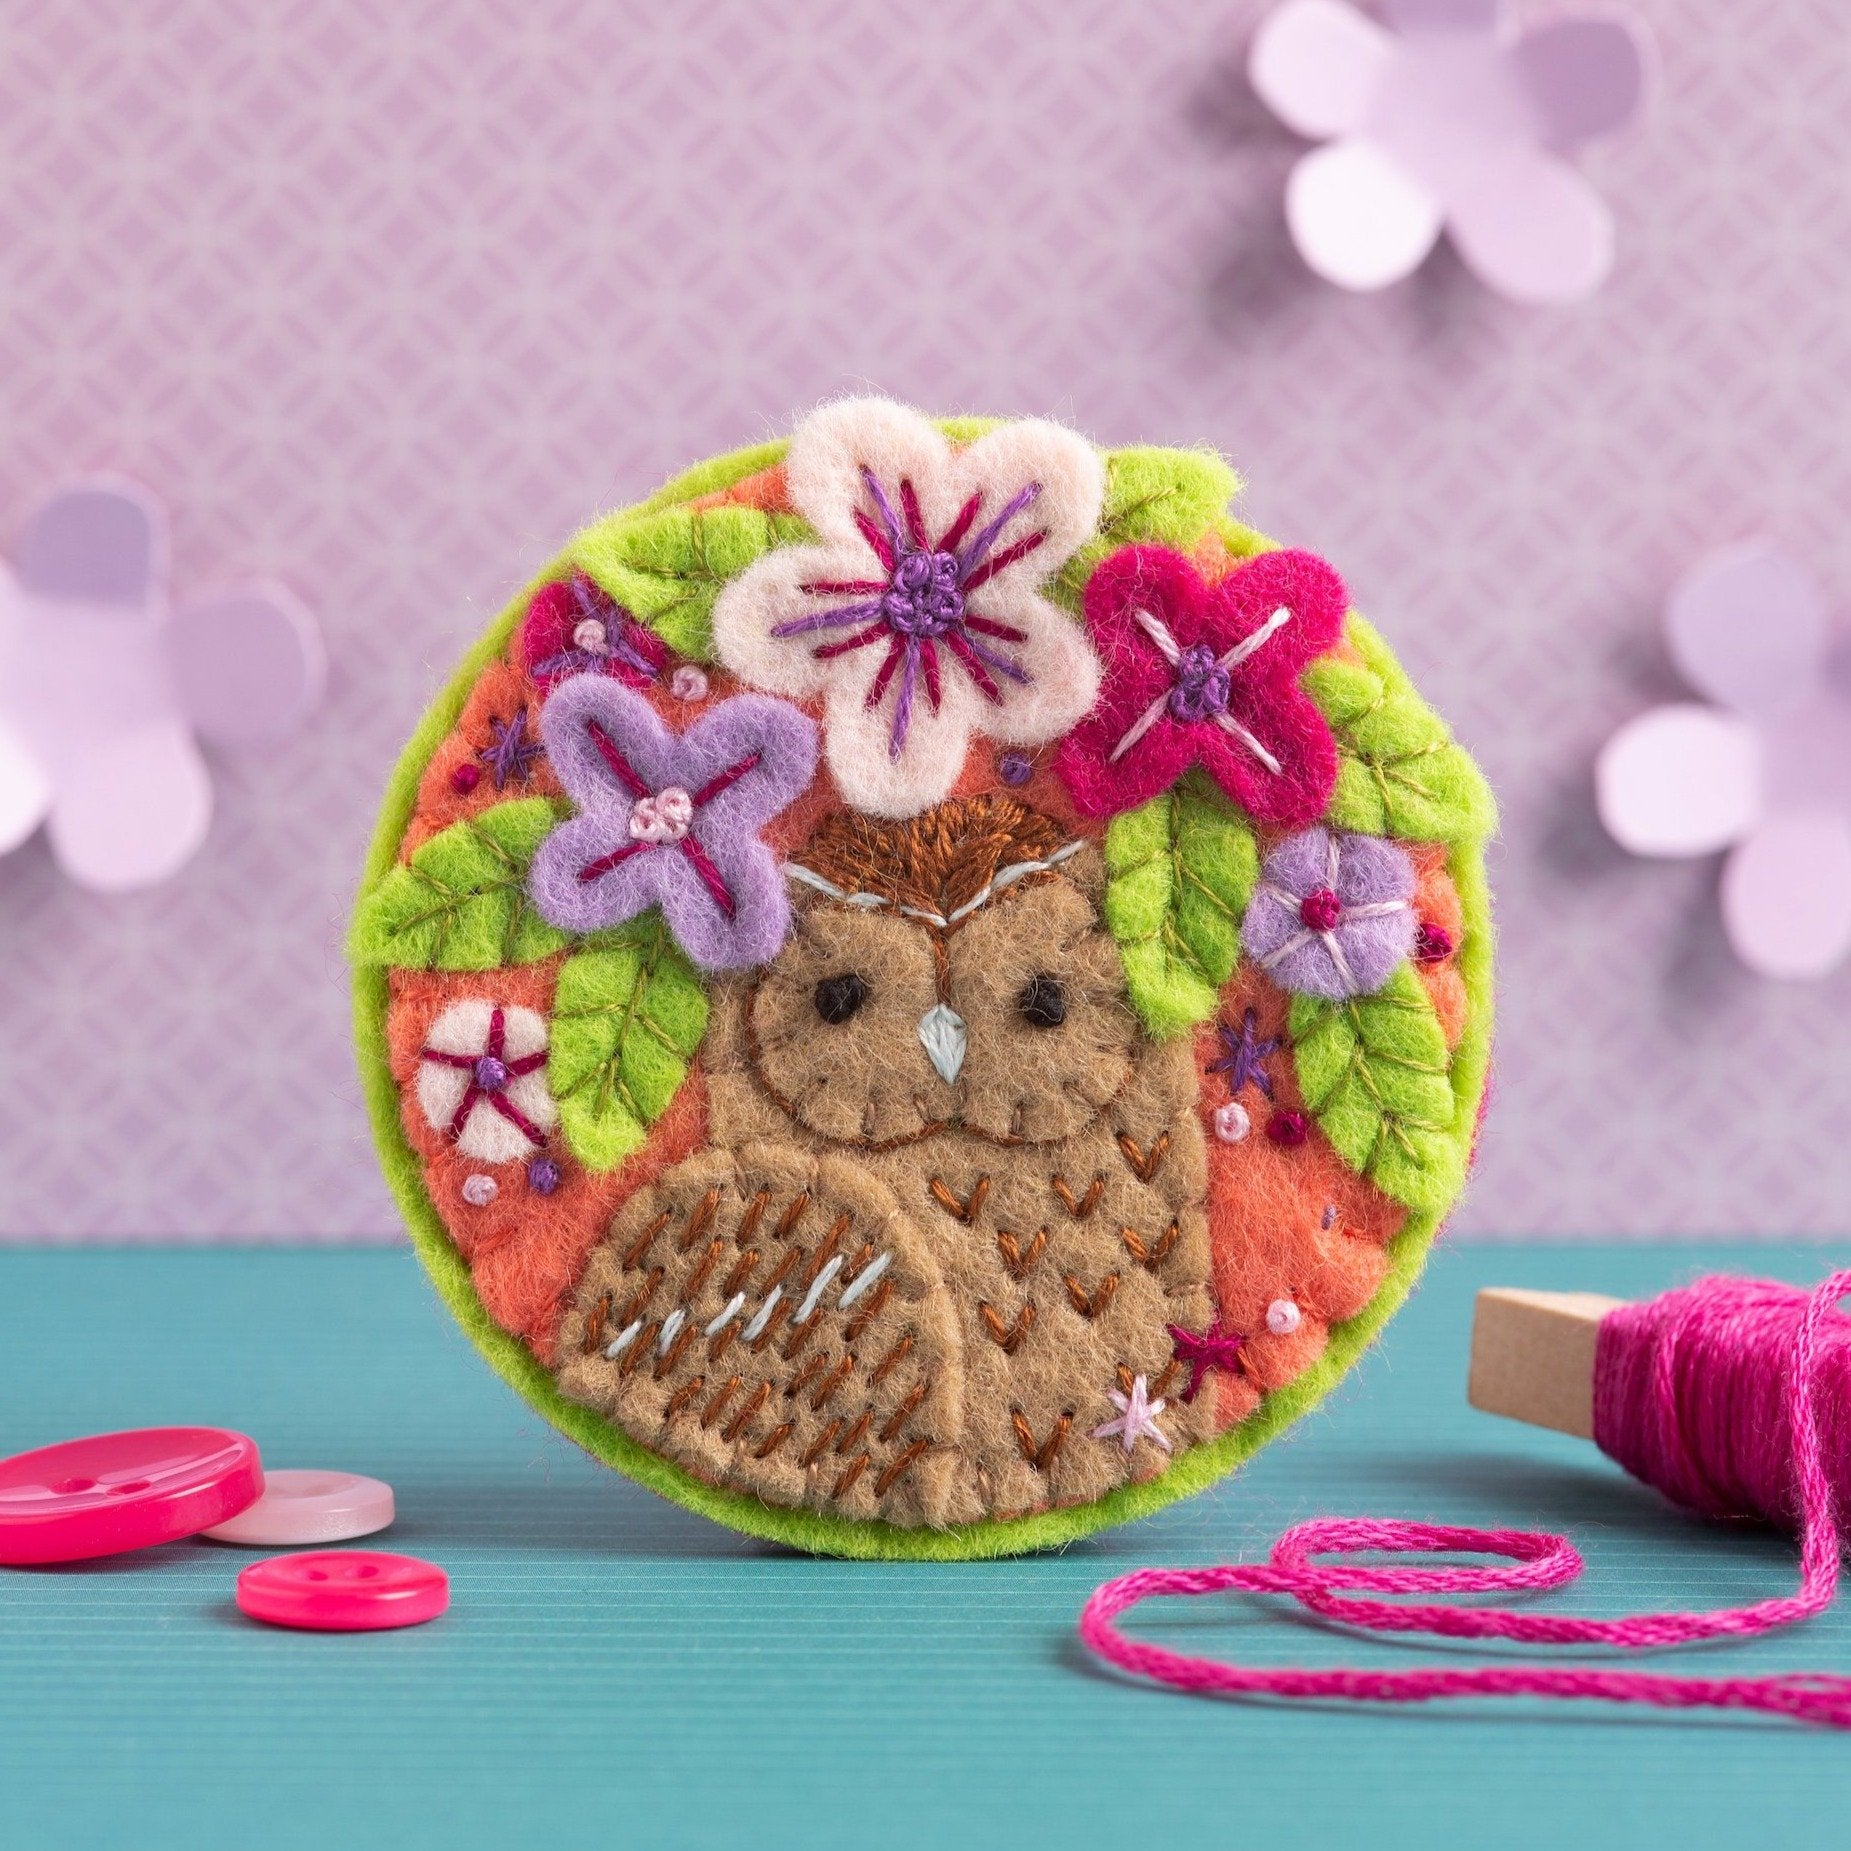 Tawny Owl brooch felt craft kit on lilac background.